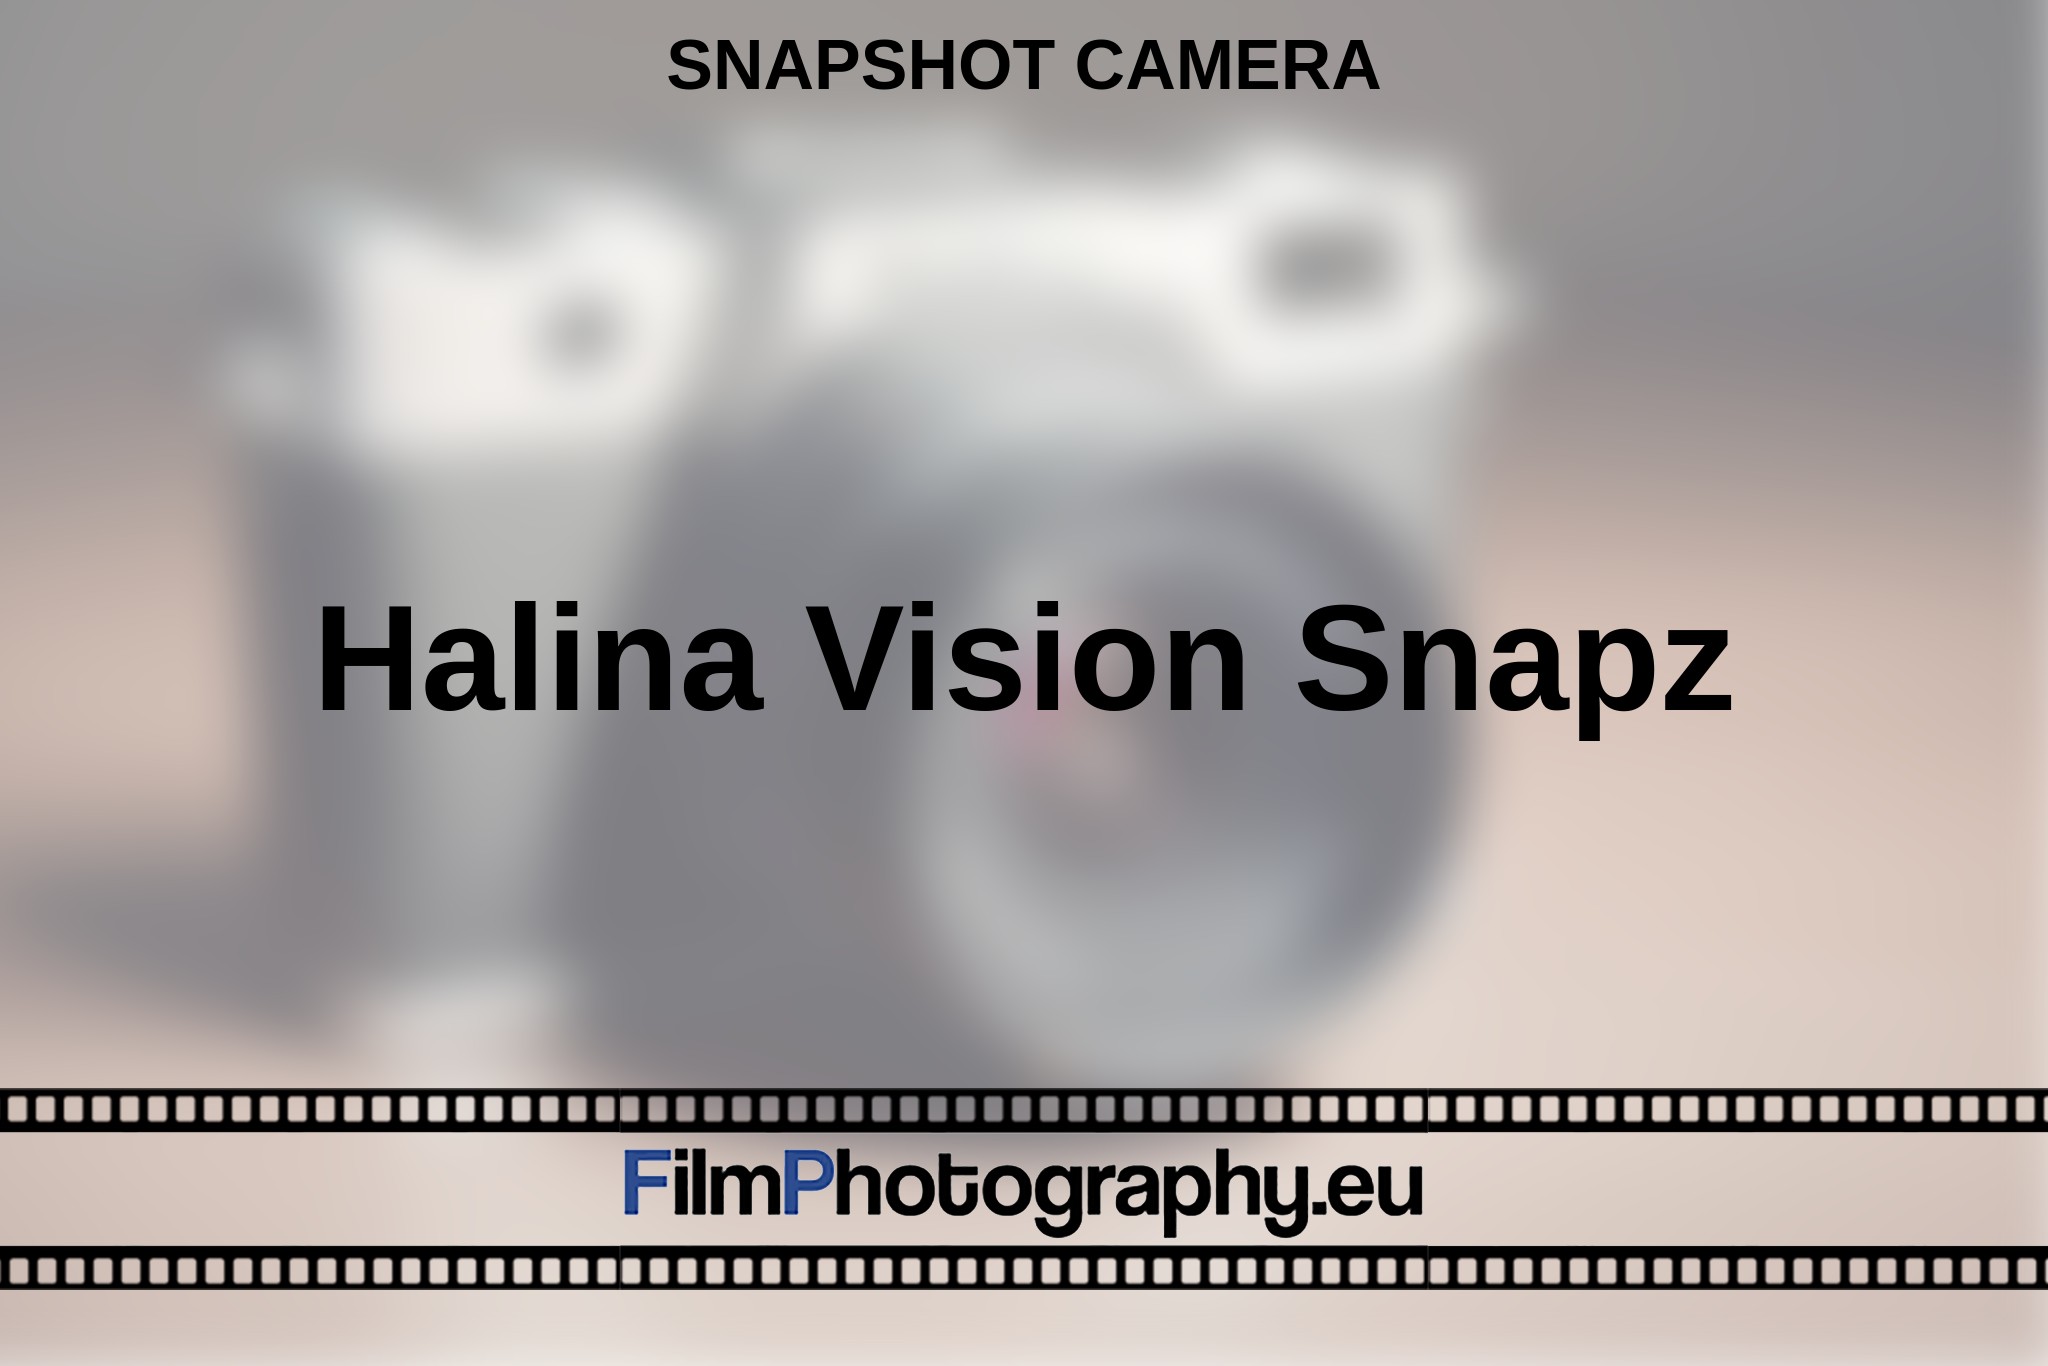 halina-vision-snapz-snapshot-camera-en-bnv.jpg